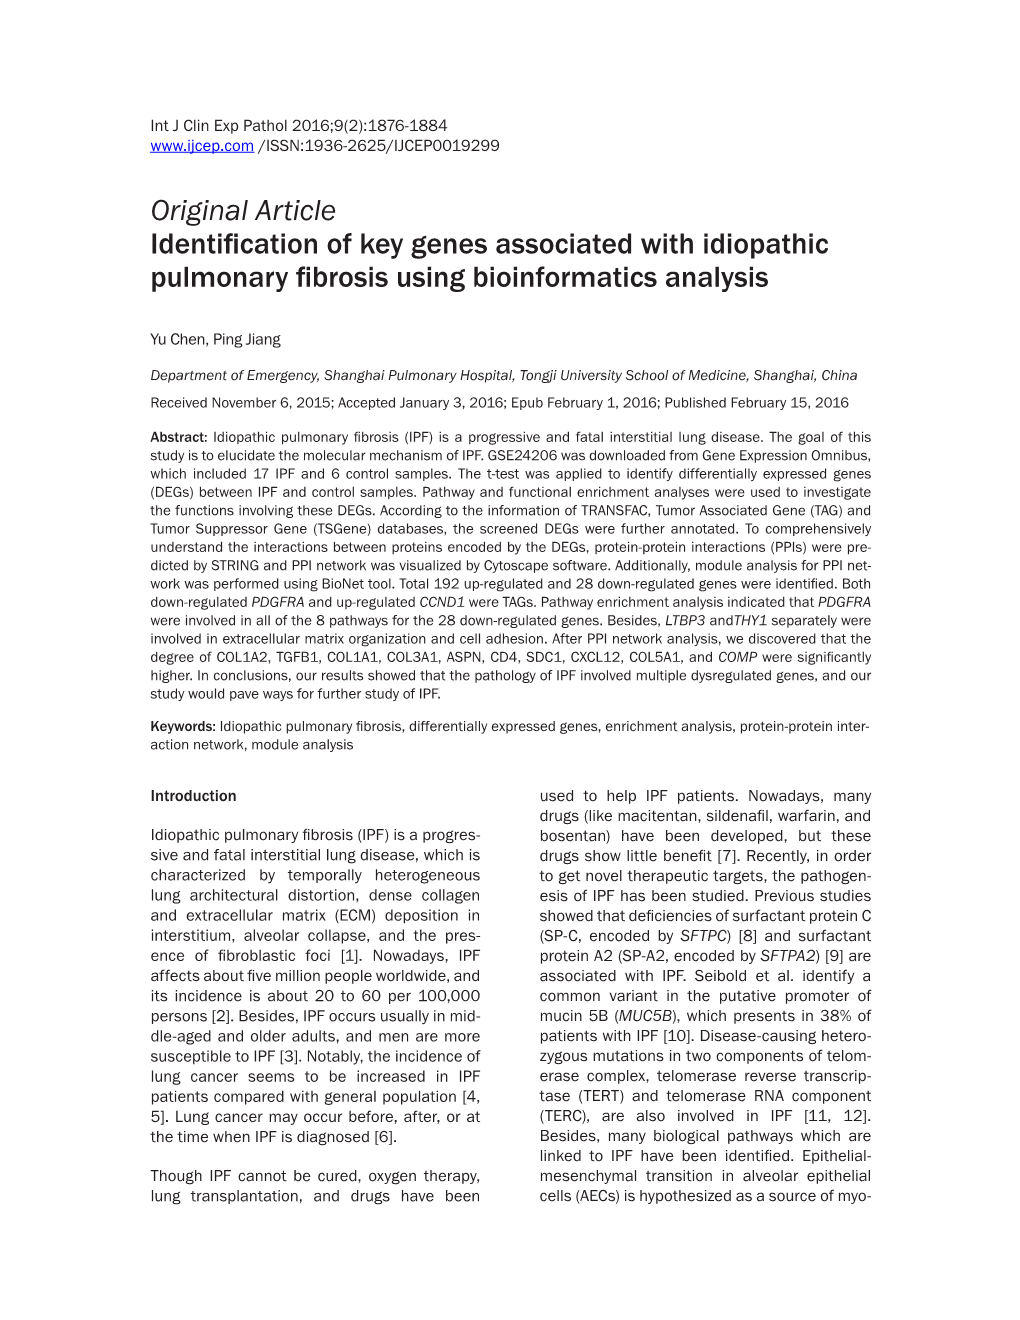 Original Article Identification of Key Genes Associated with Idiopathic Pulmonary Fibrosis Using Bioinformatics Analysis